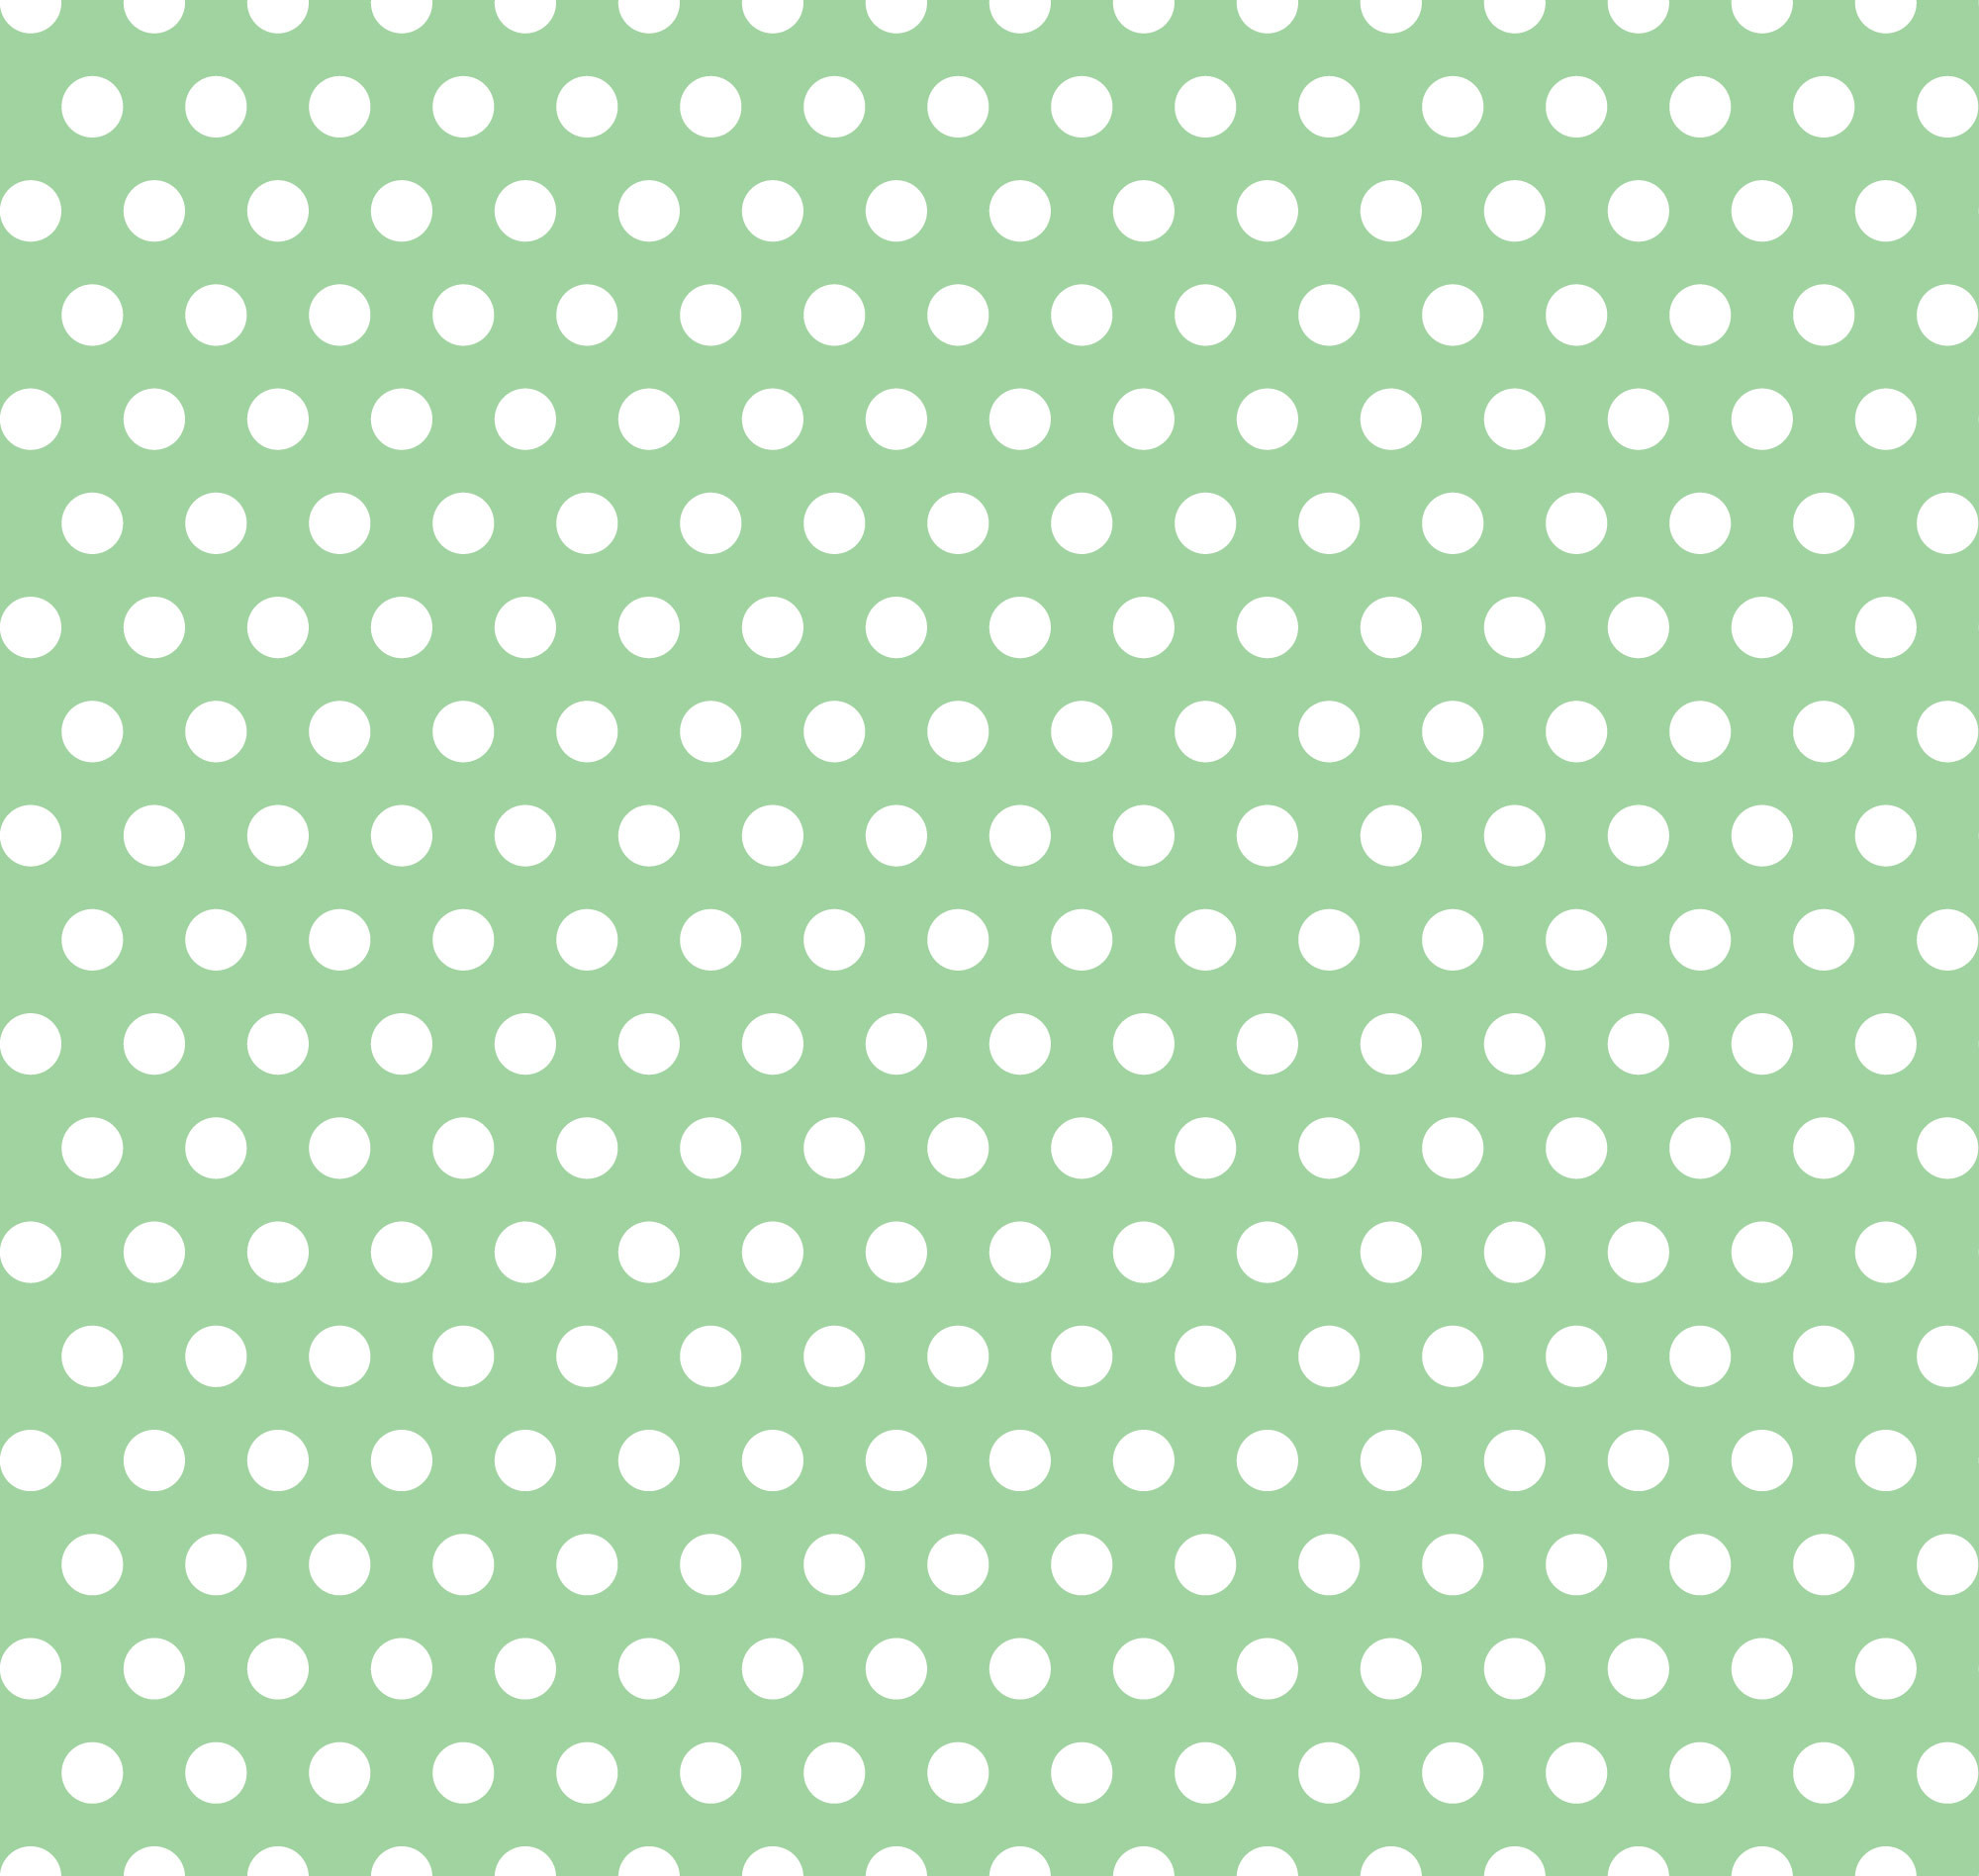 8,800+ Green Polka Dot Background Illustrations, Royalty-Free